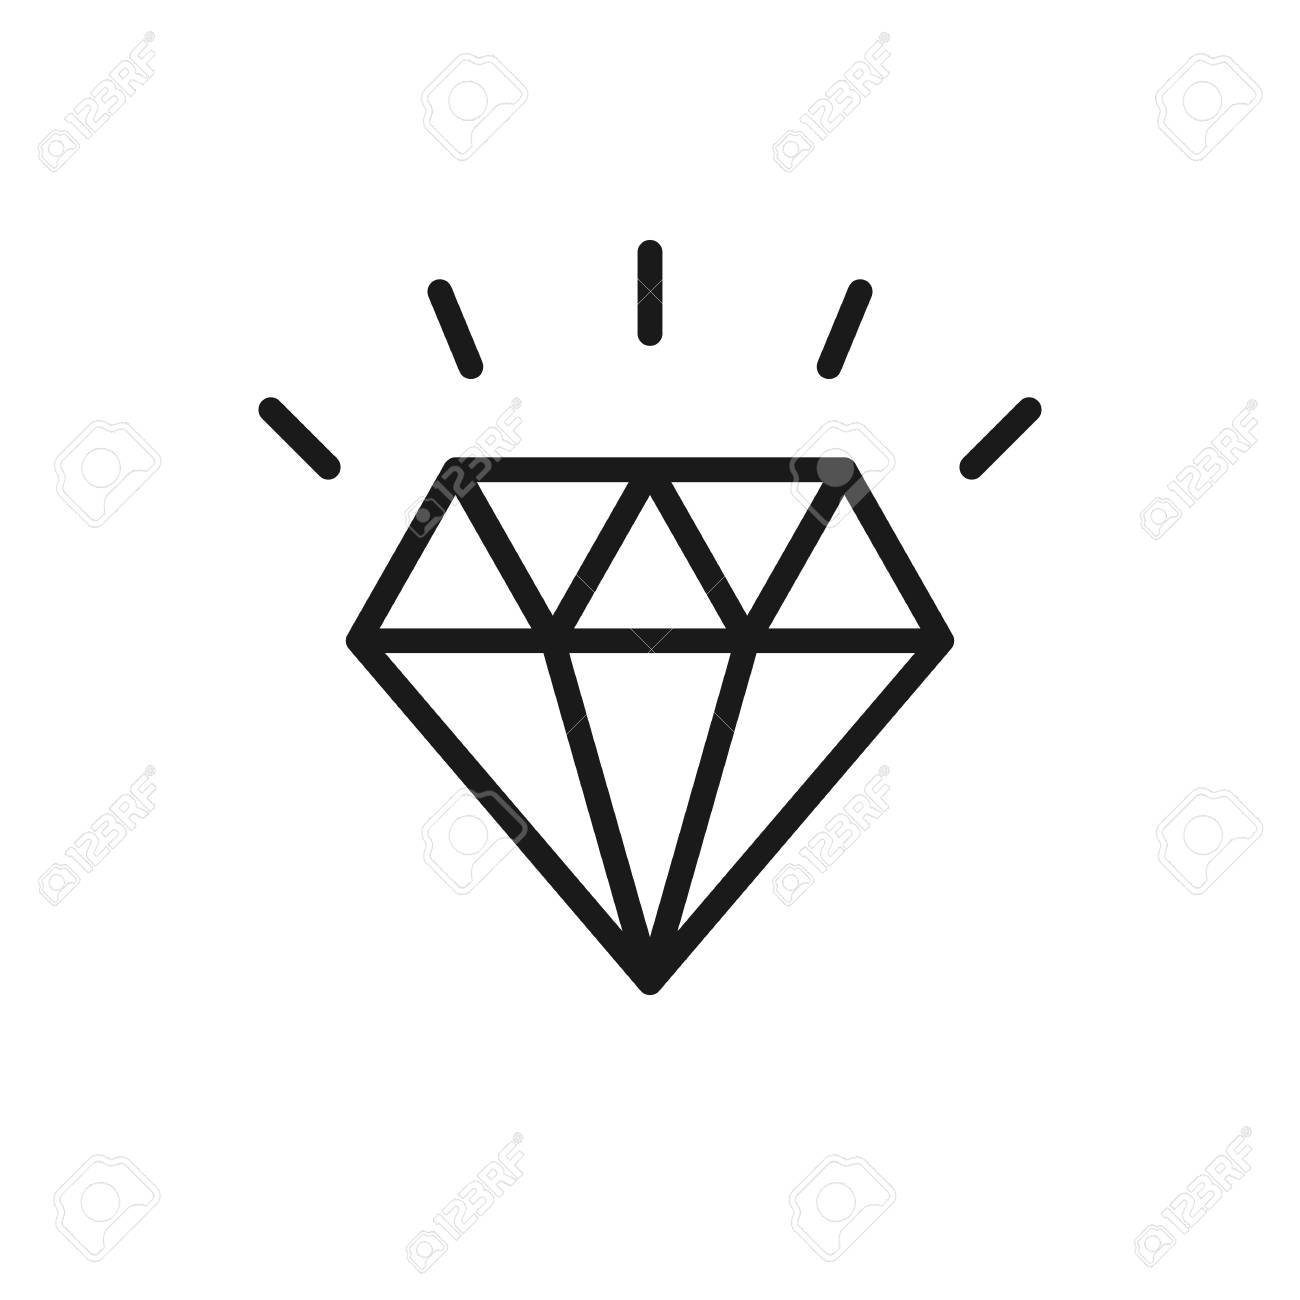 Black isolated outline icon of shiny diamond on white background.